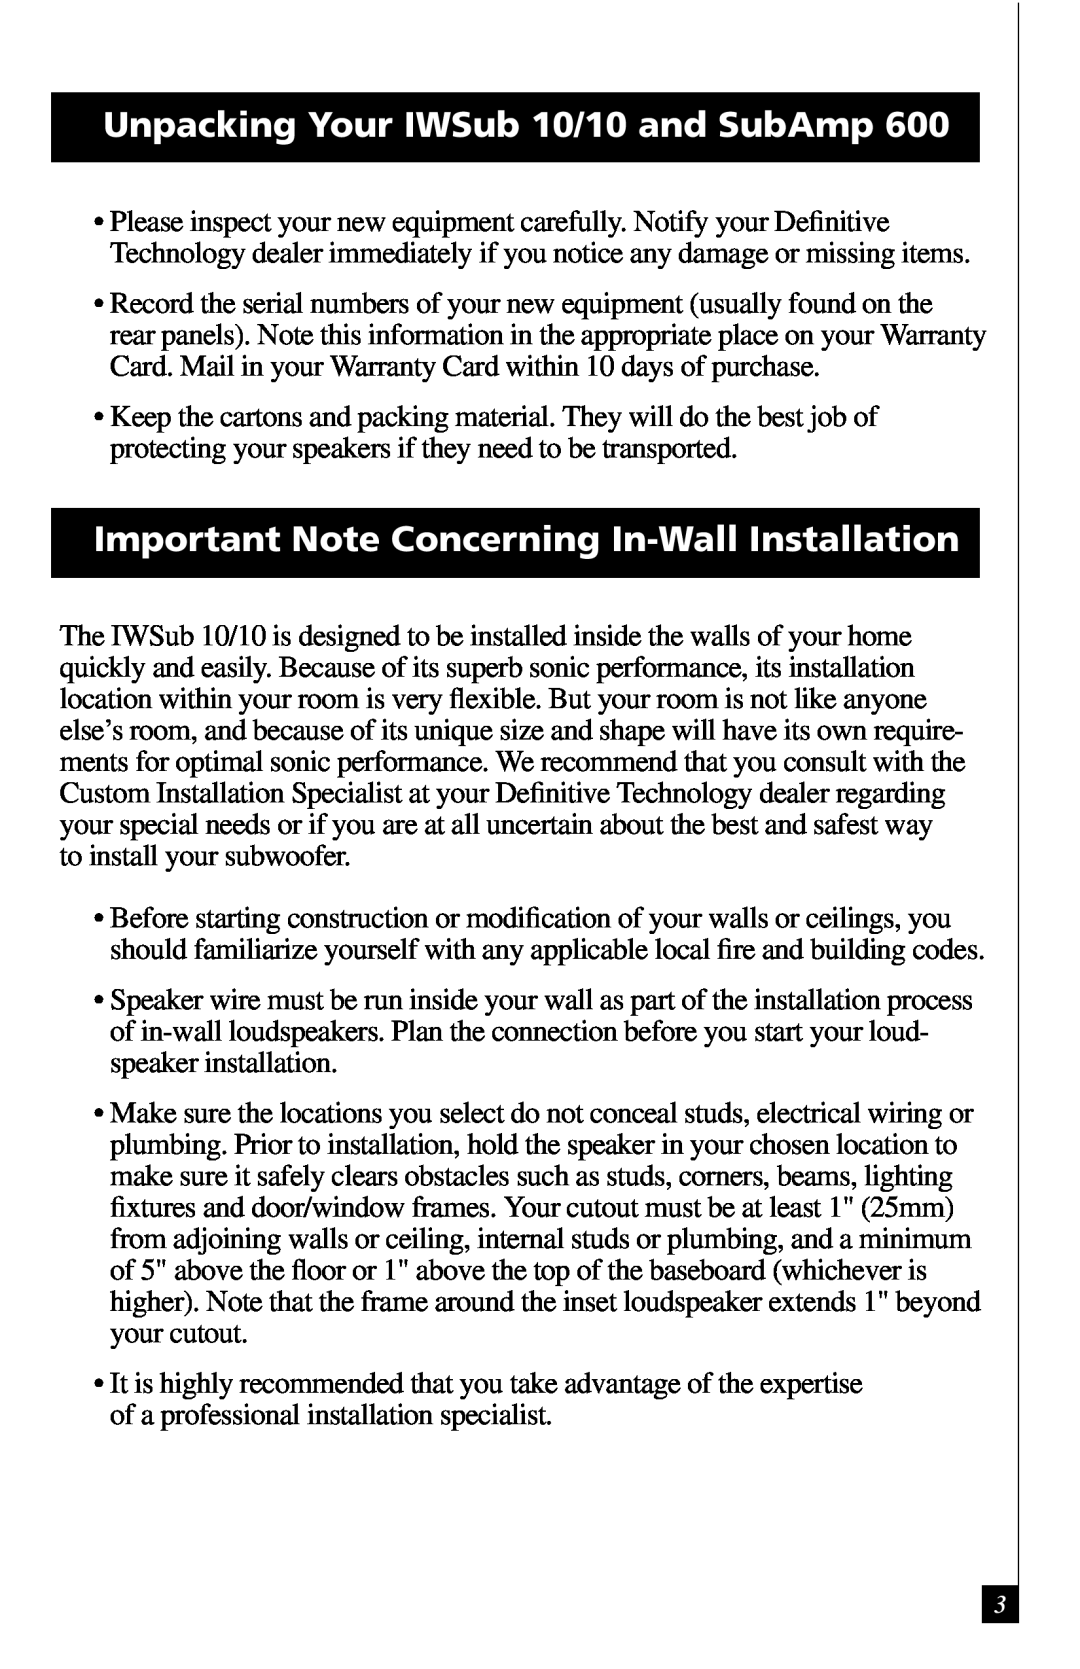 Definitive Technology IWSUB1010 Unpacking Your IWSub 10/10 and SubAmp, Important Note Concerning In-WallInstallation 